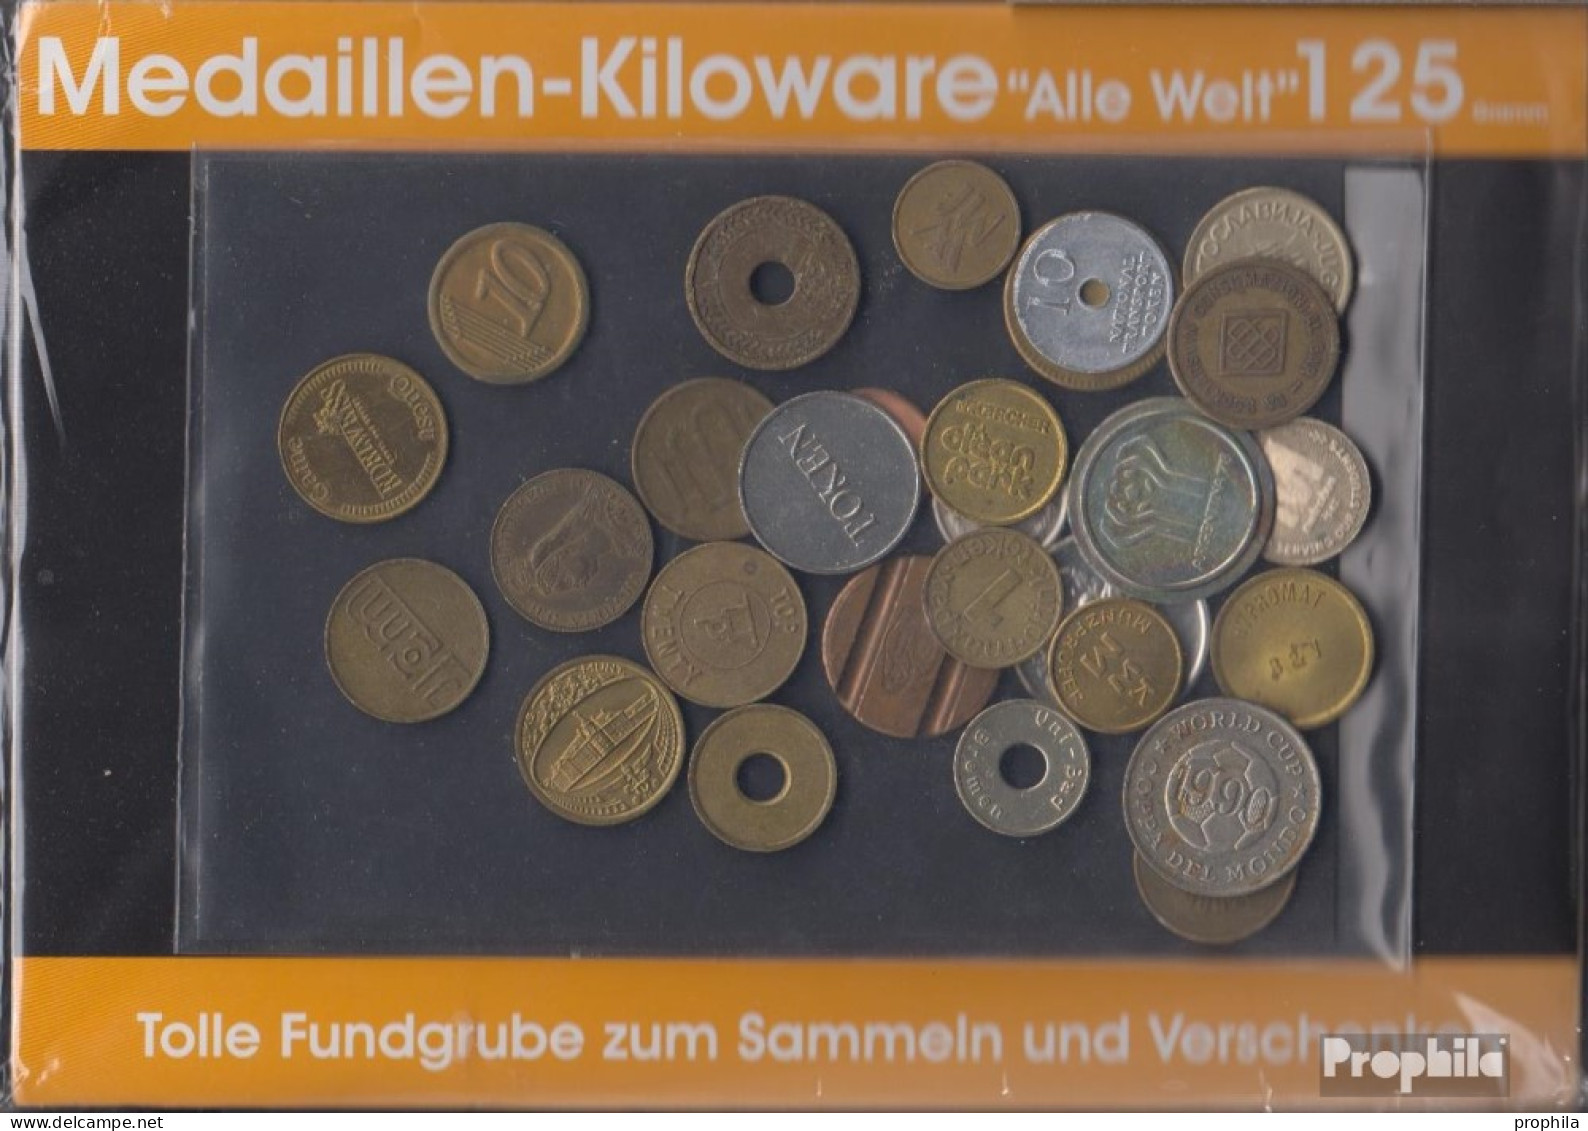 Alle Welt 125 Gramm Medaillenkiloware - Lots & Kiloware - Coins